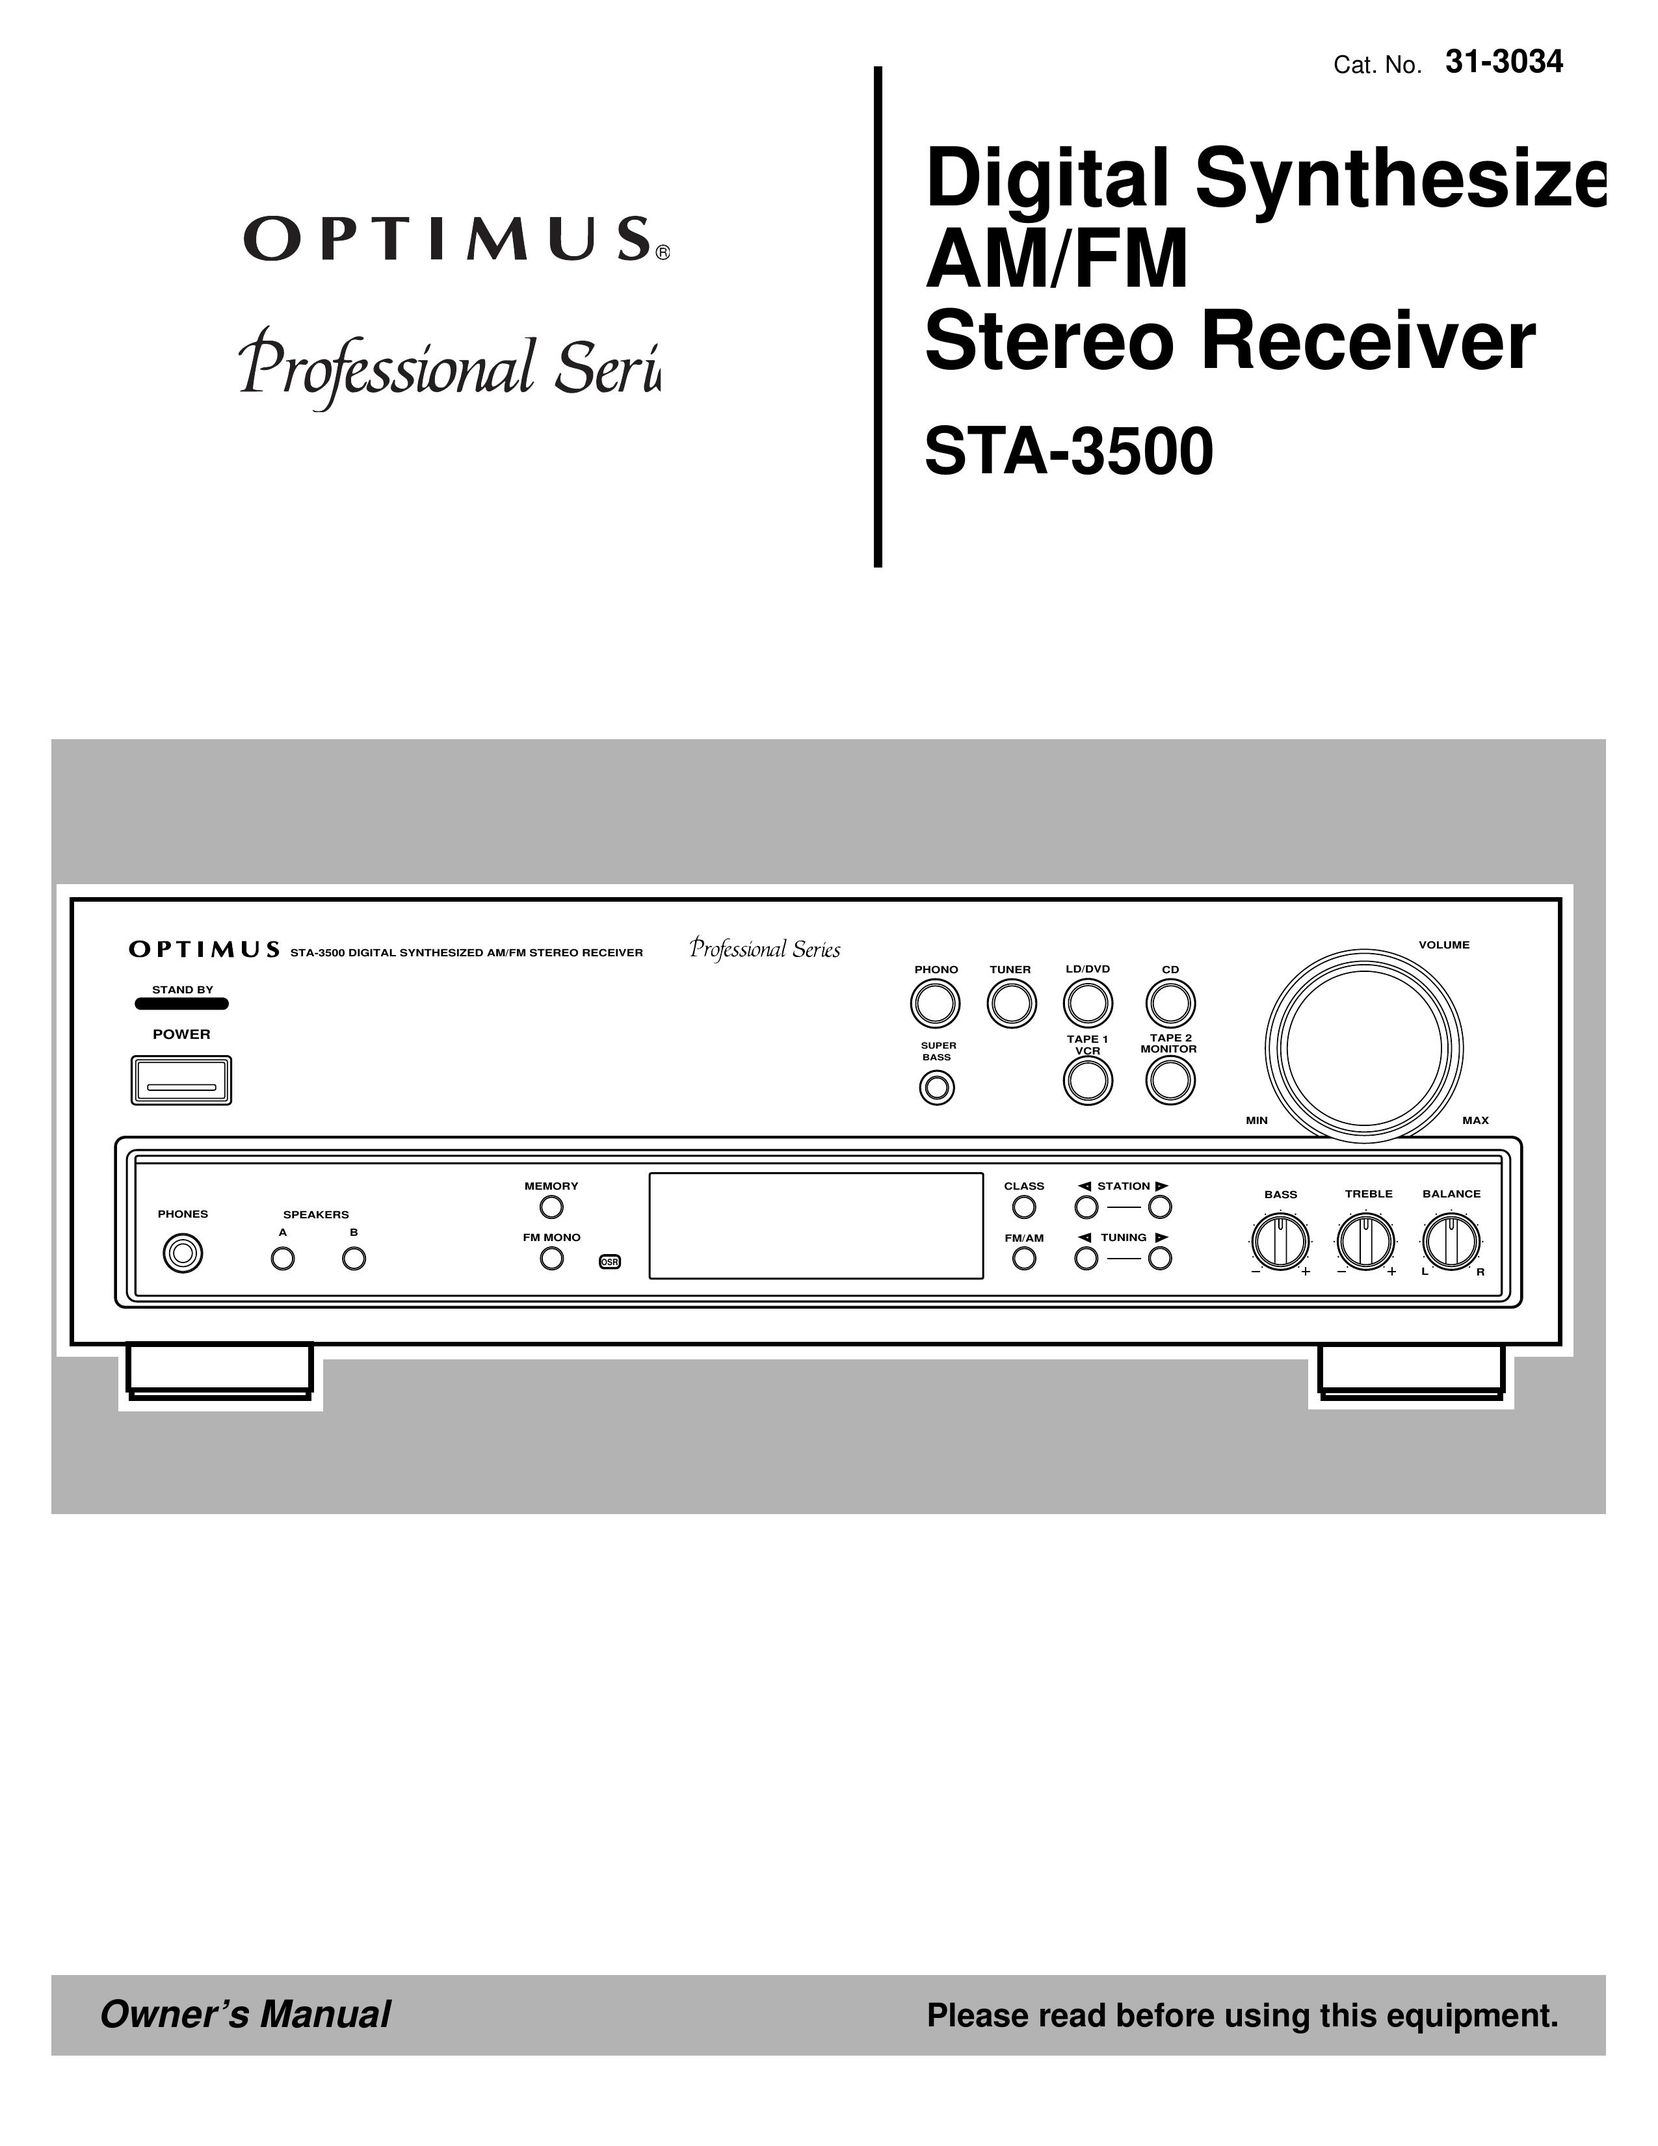 Optimus STA-3500 Stereo Receiver User Manual